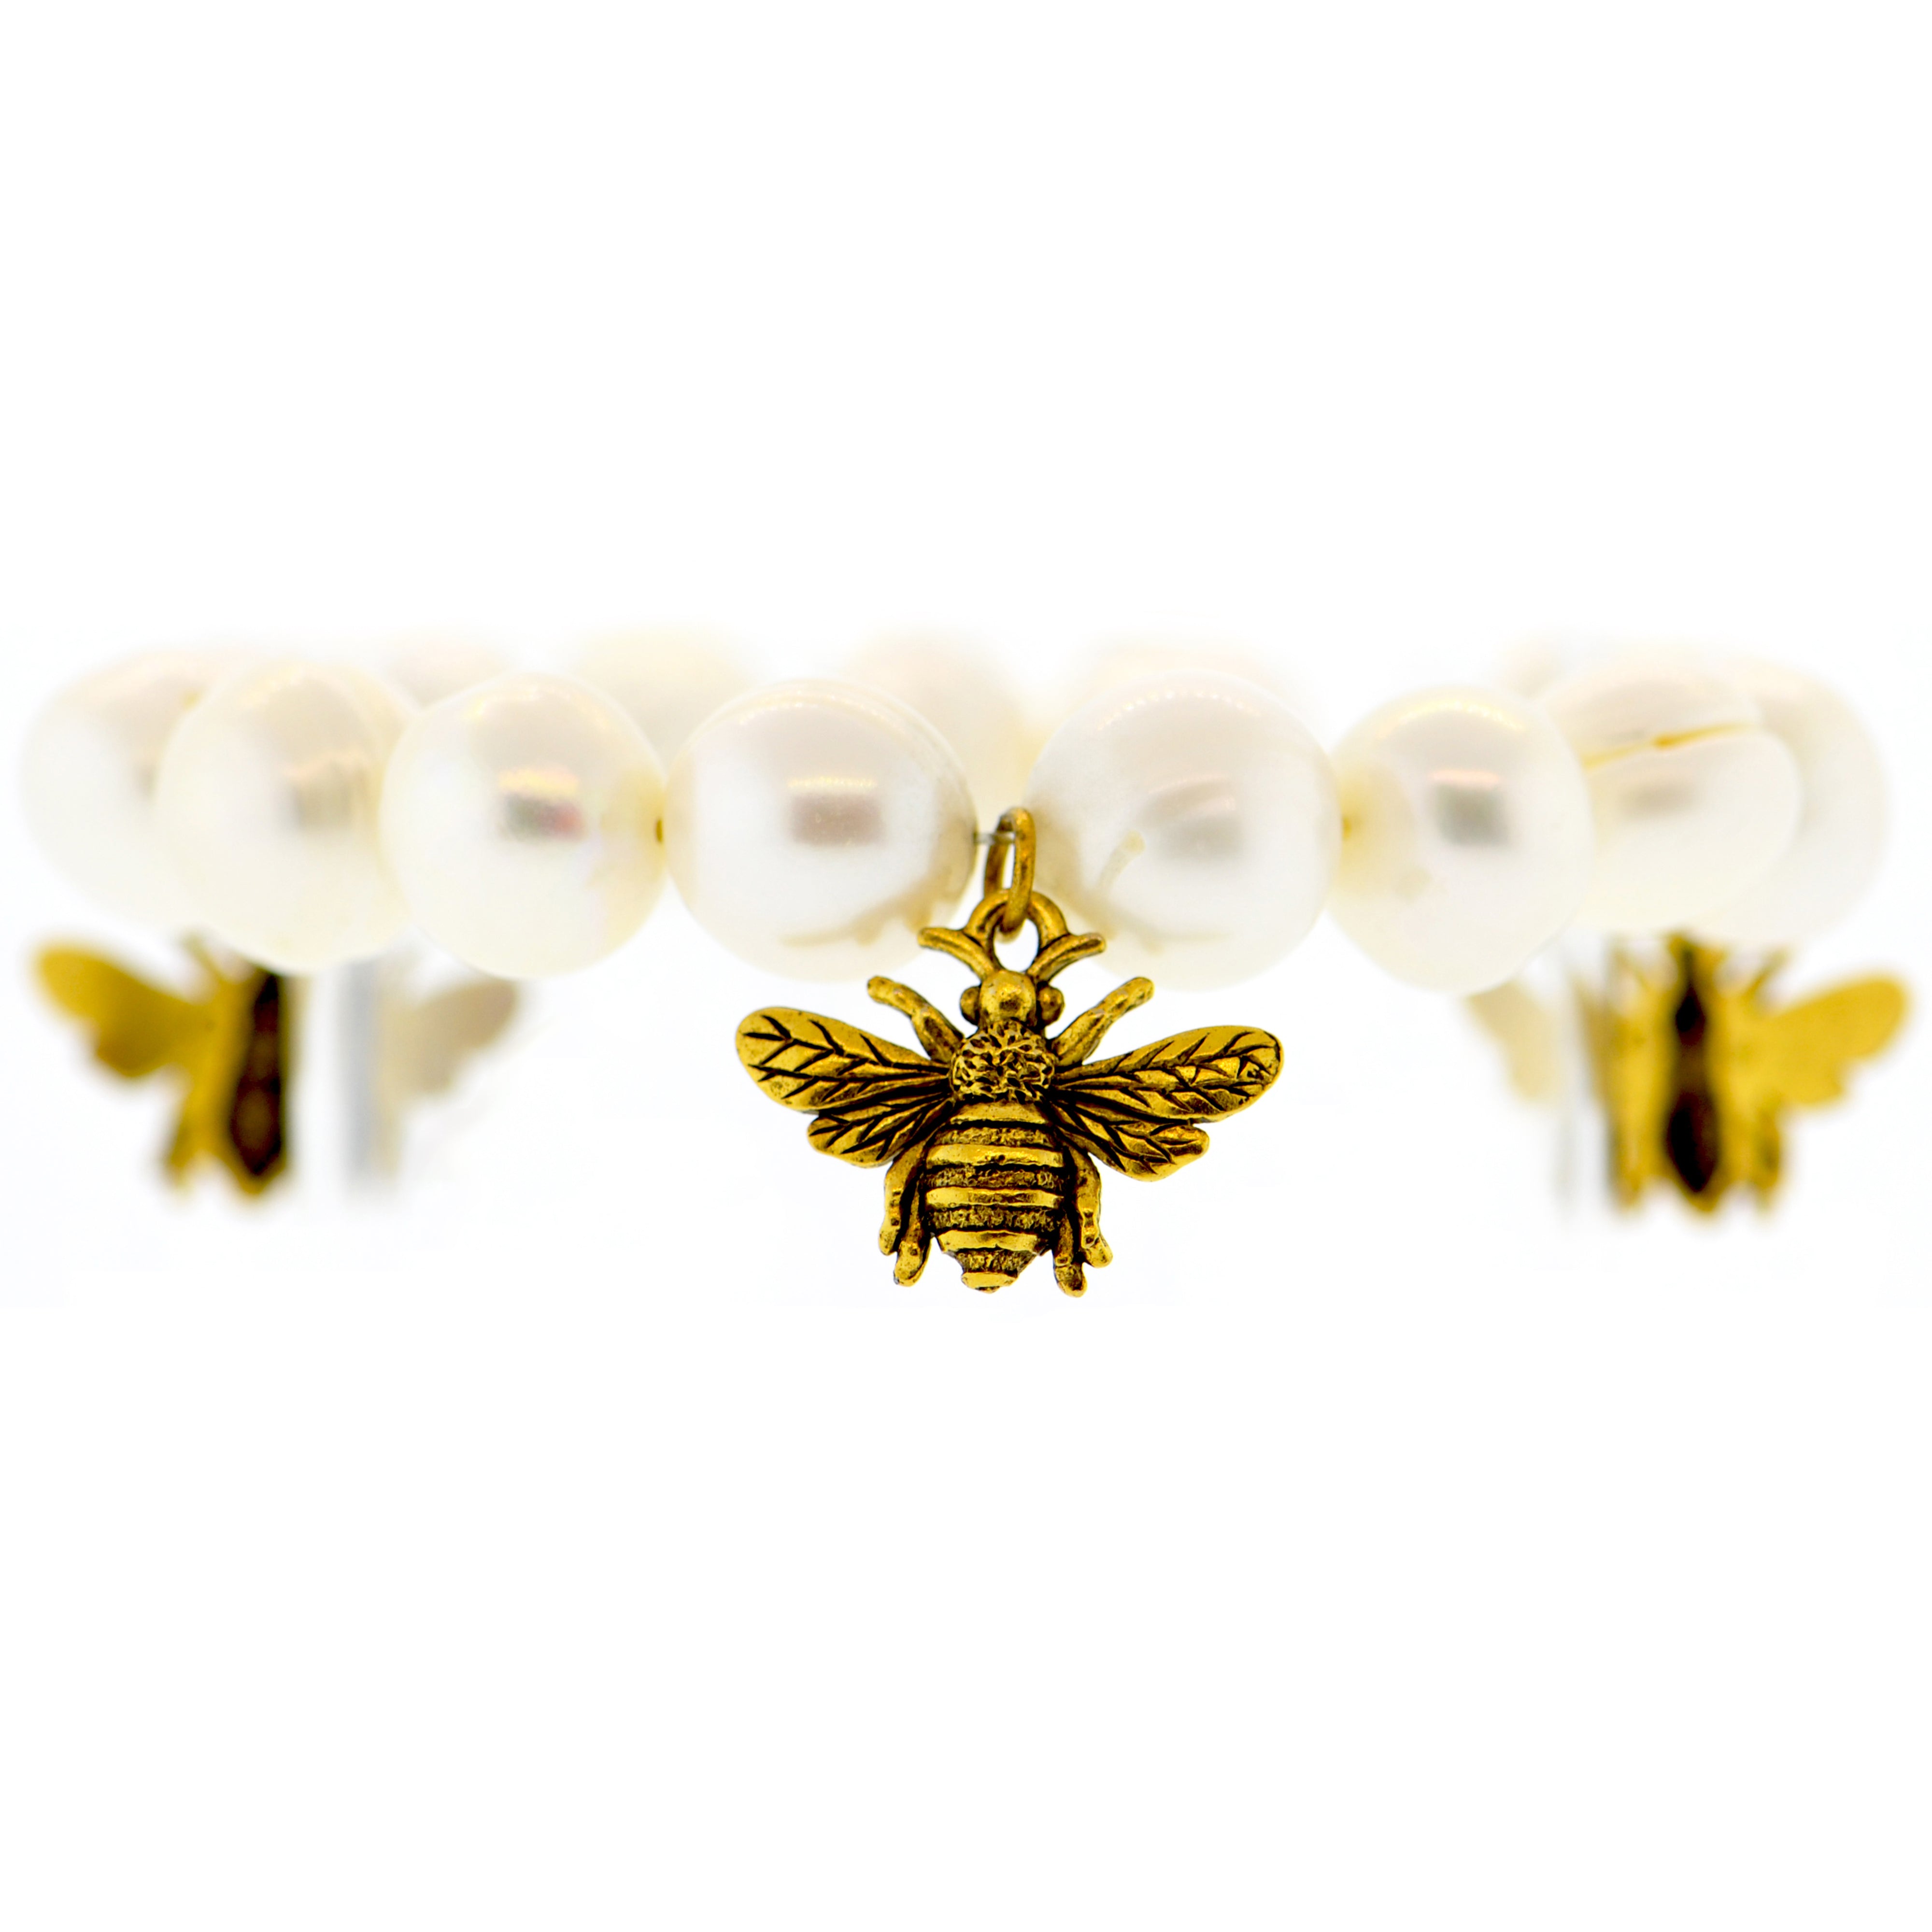 White Pearl Bumble Bee Botanical Bracelet